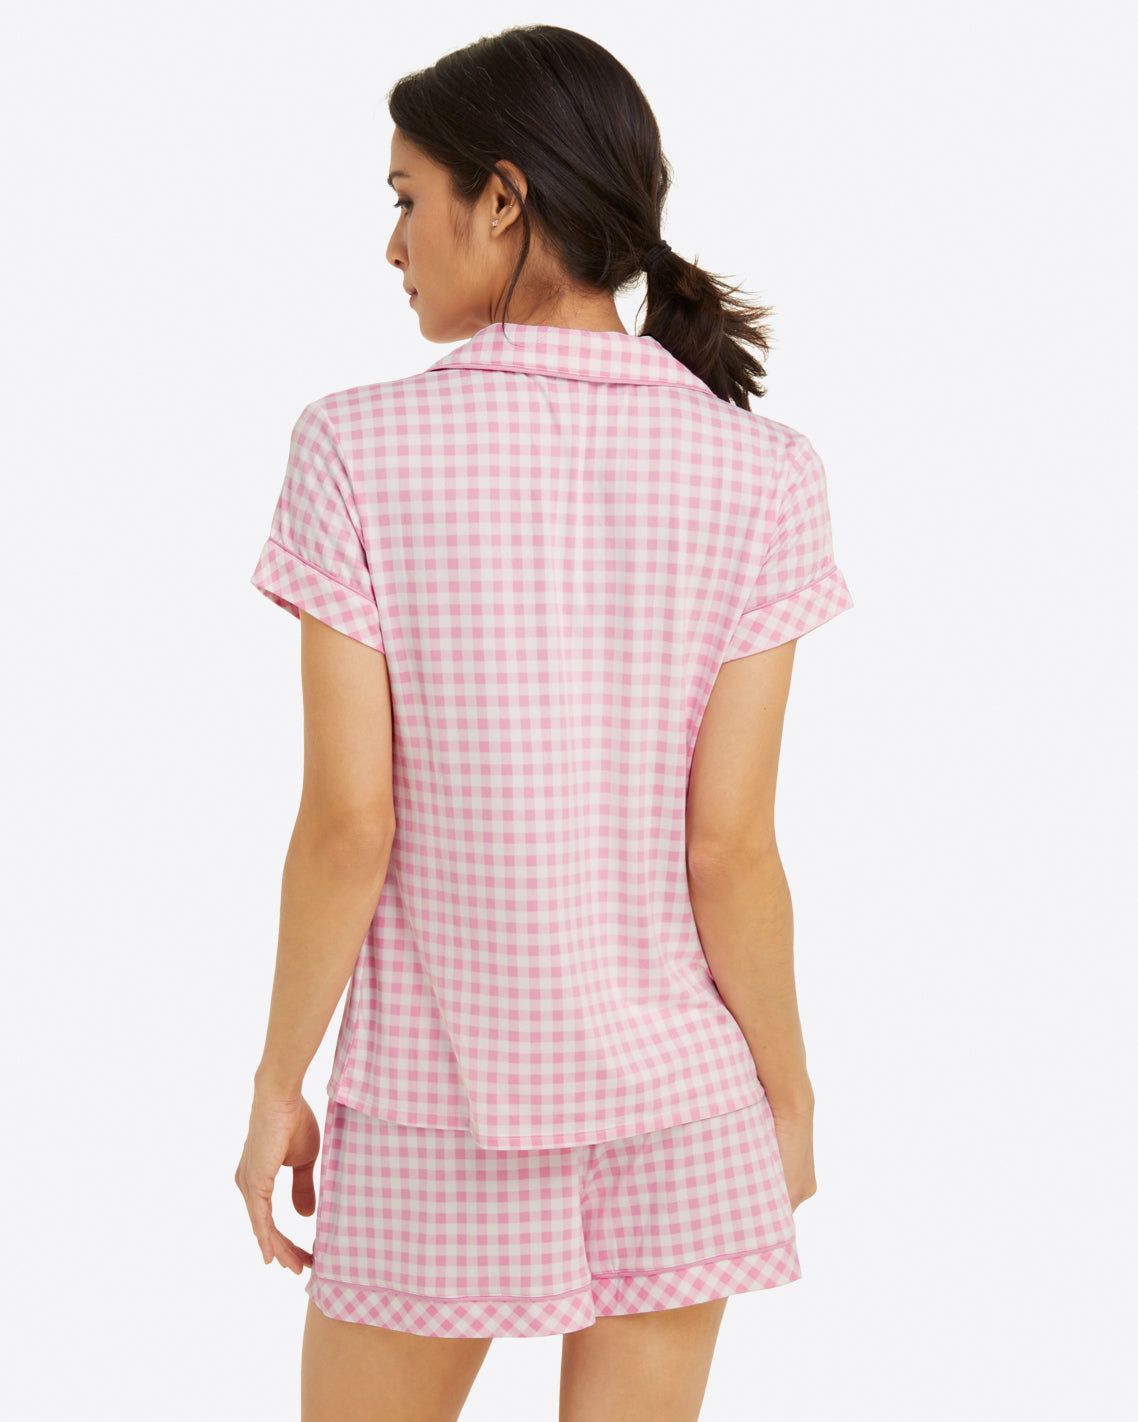 Sara Pajama Set in Light Pink Gingham | Draper James (US)